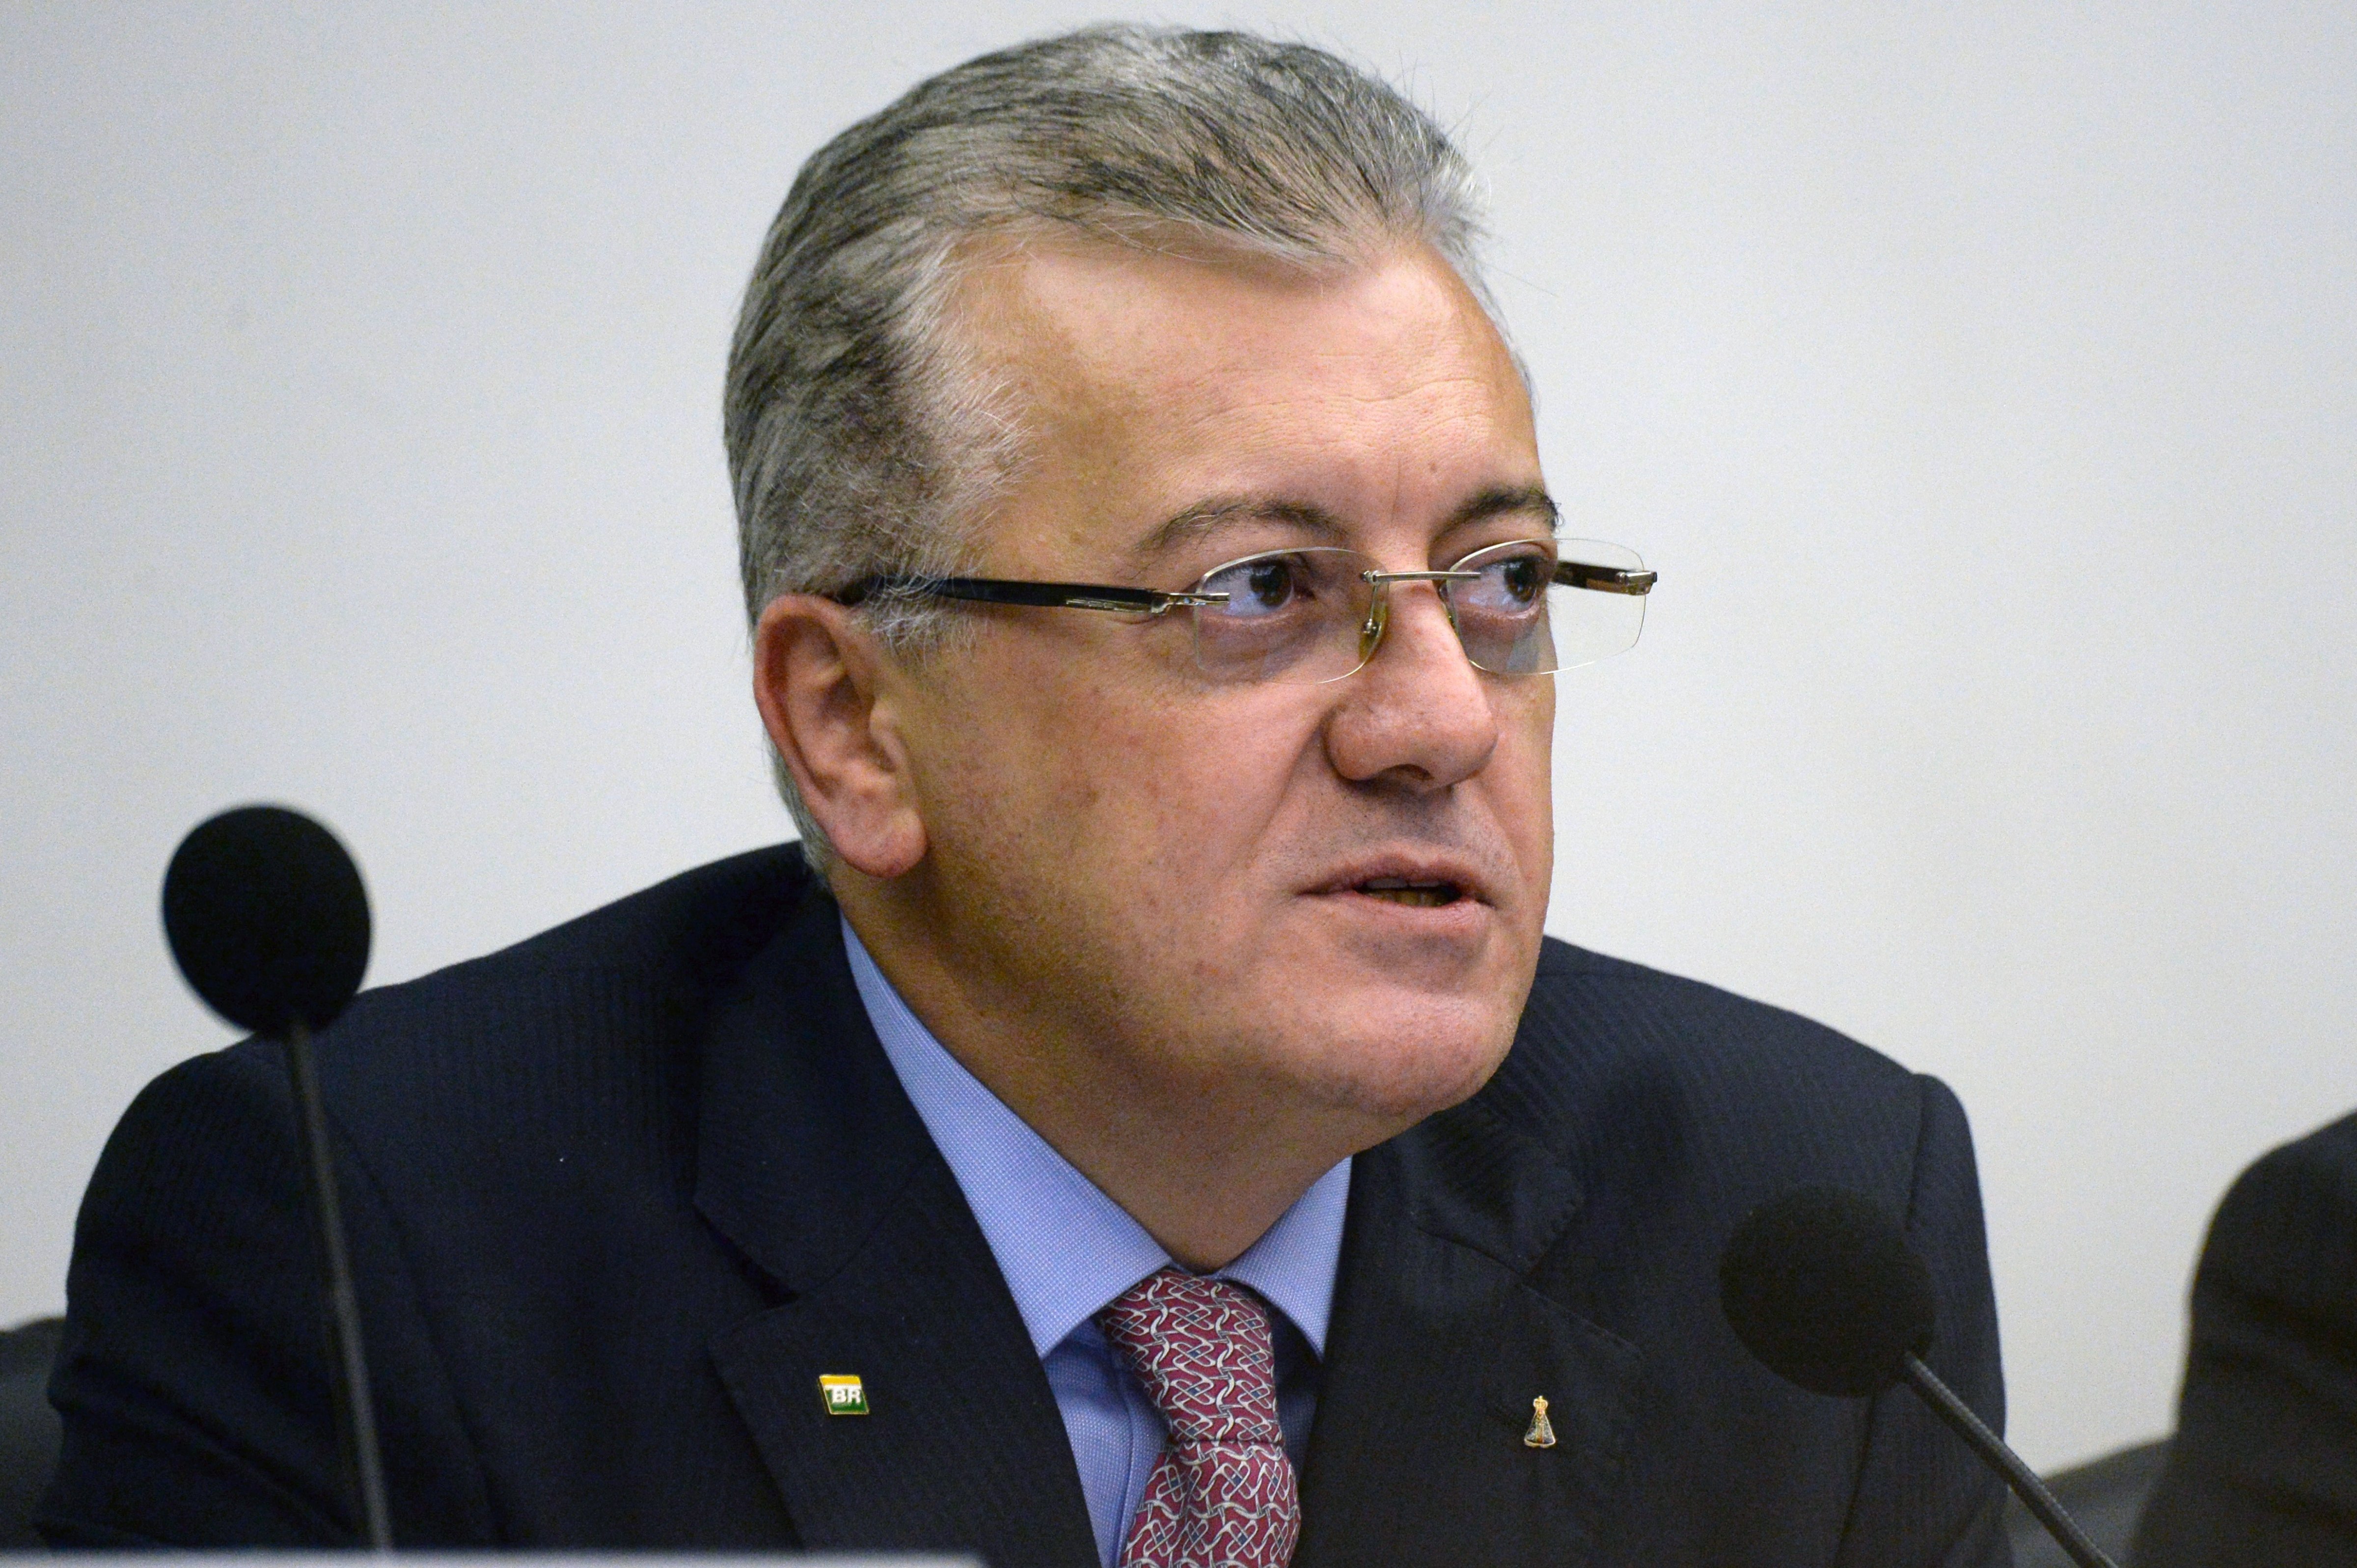 Petrobras President Aldemir Bendine at a press conference in Rio de Janeiro on April 22, 2015.